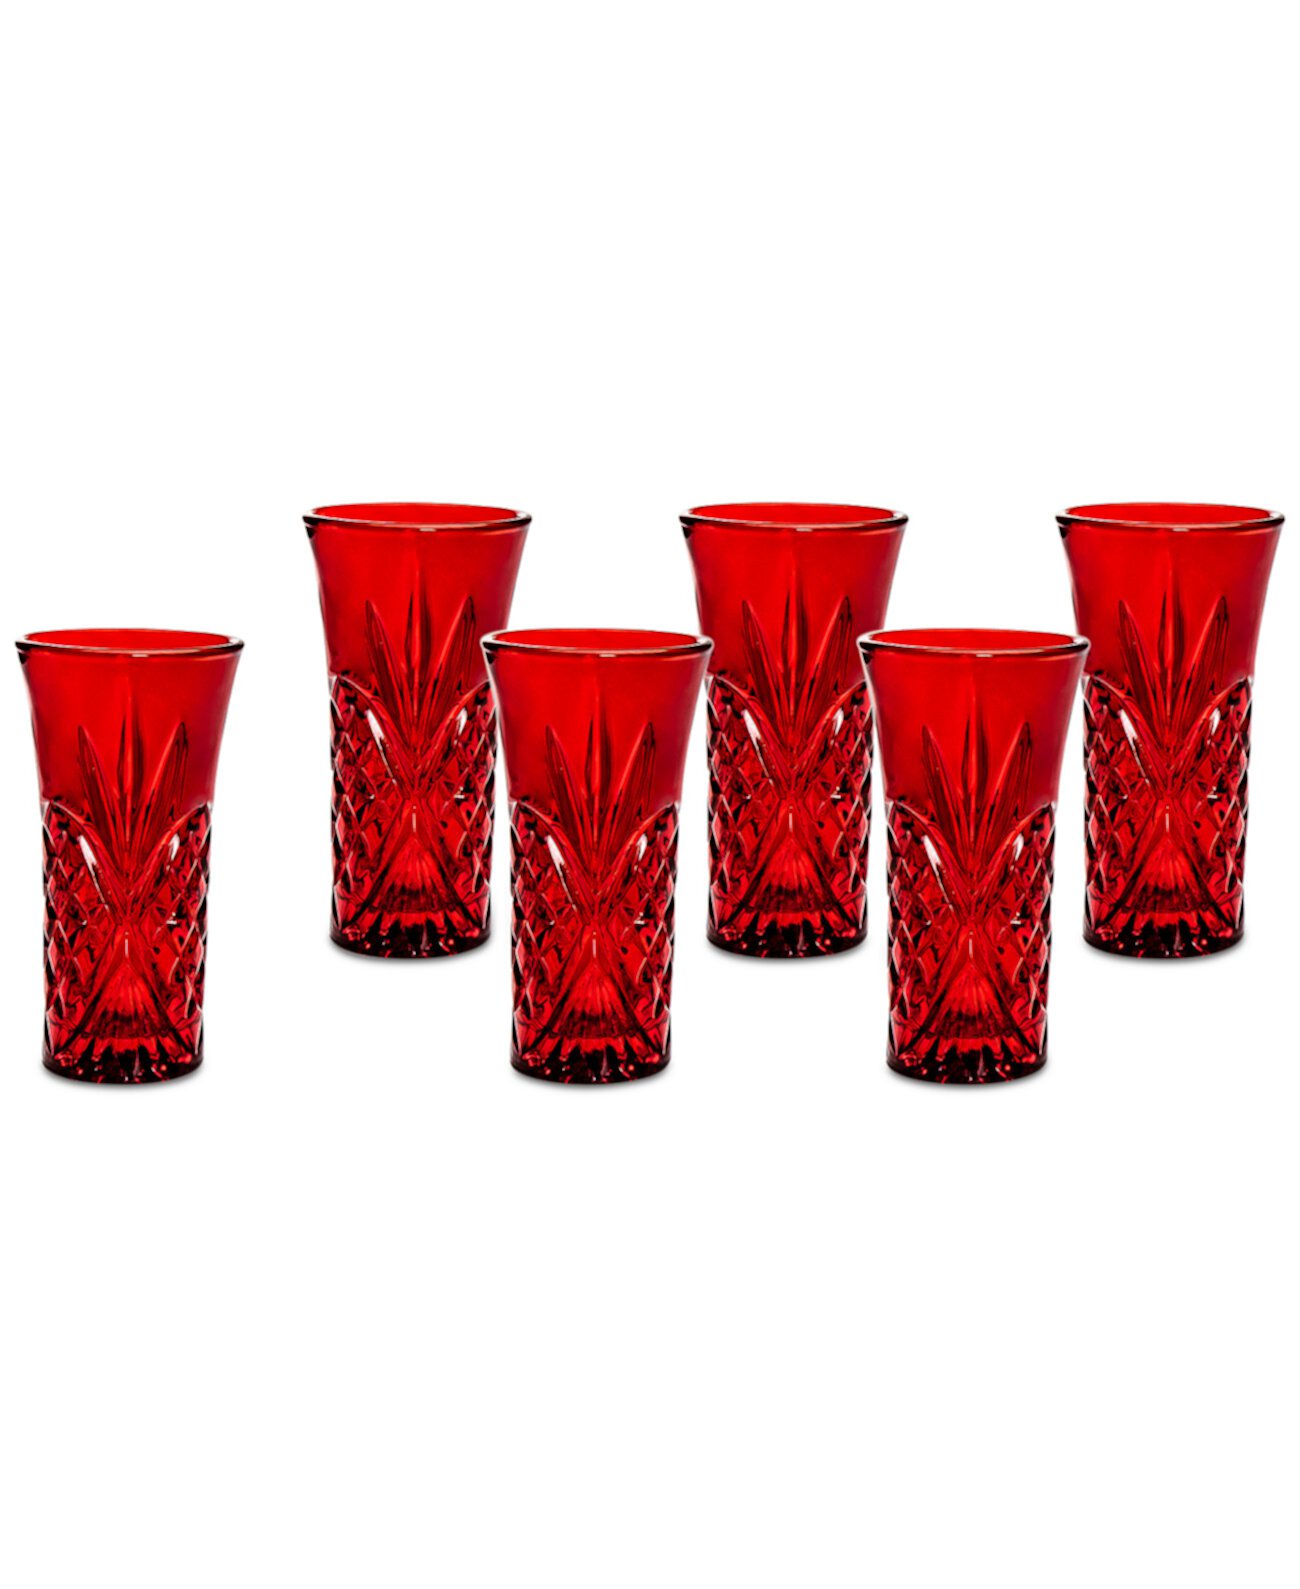 Dublin Red Vodka Shooters, набор из 6 шт. Godinger